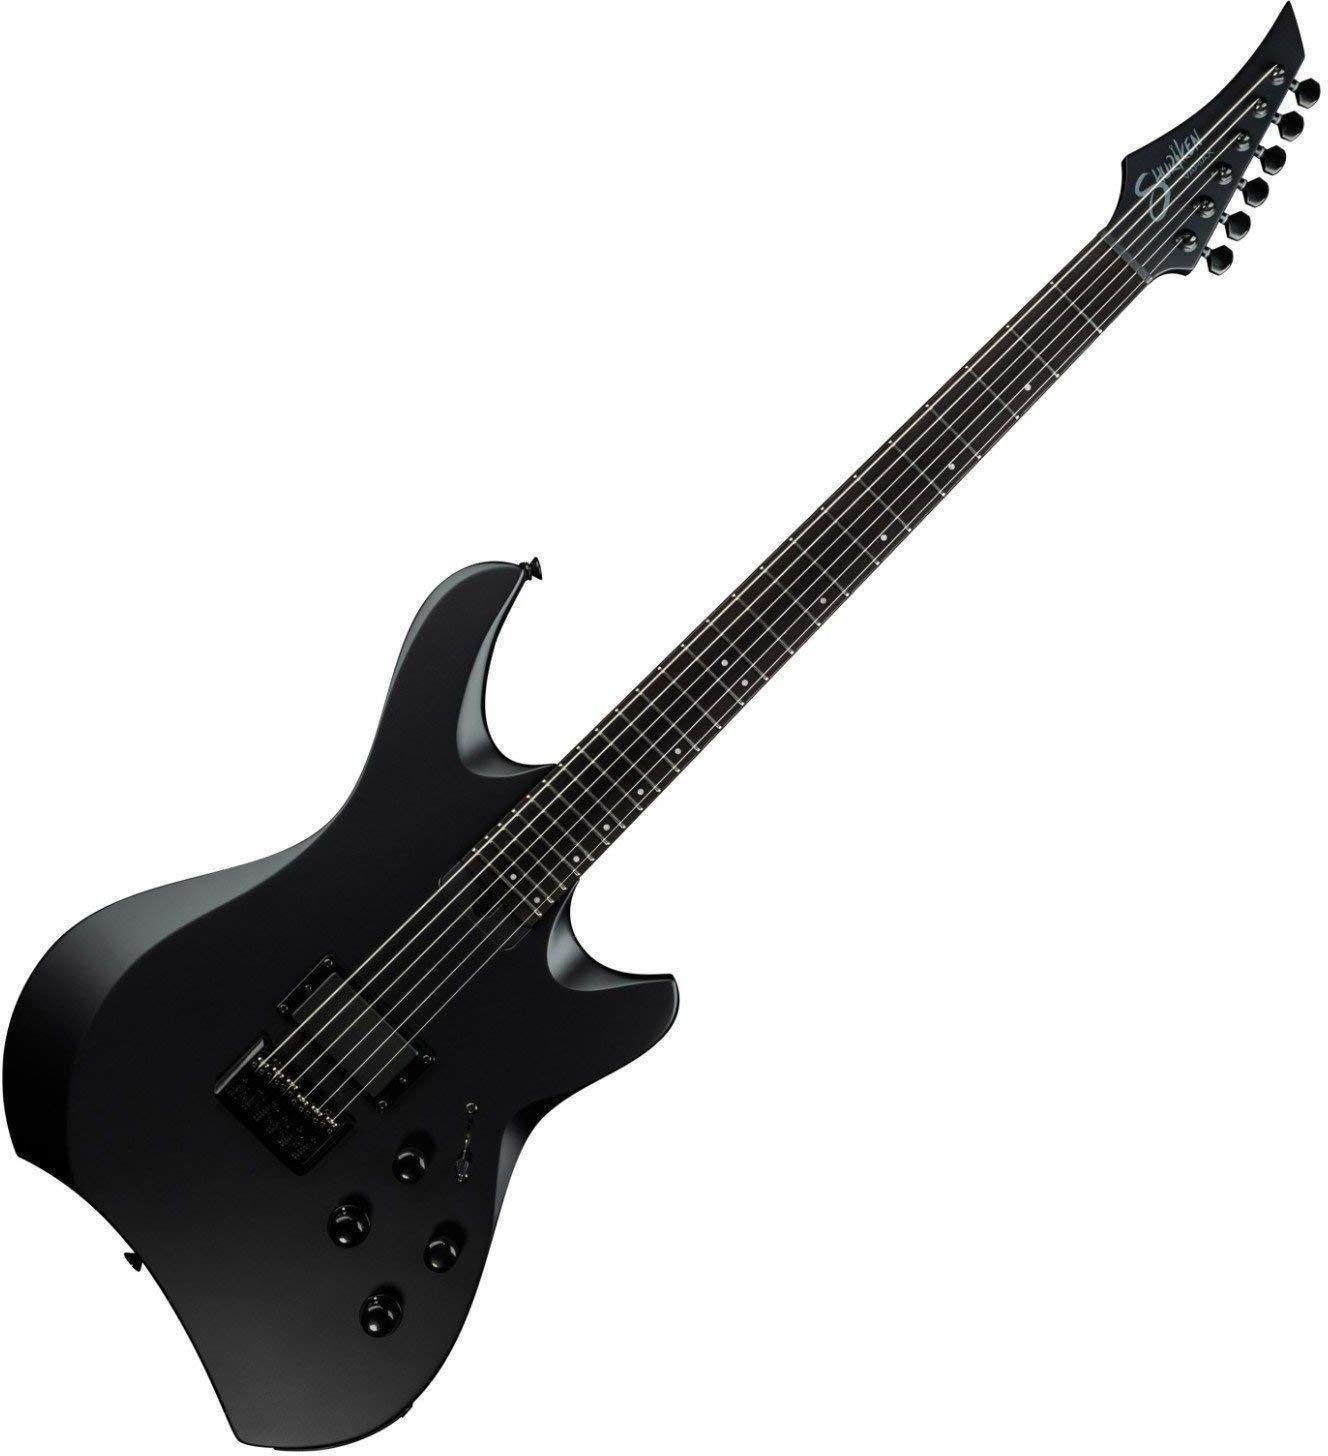 Electrische gitaar Line6 Shuriken Variax SR270